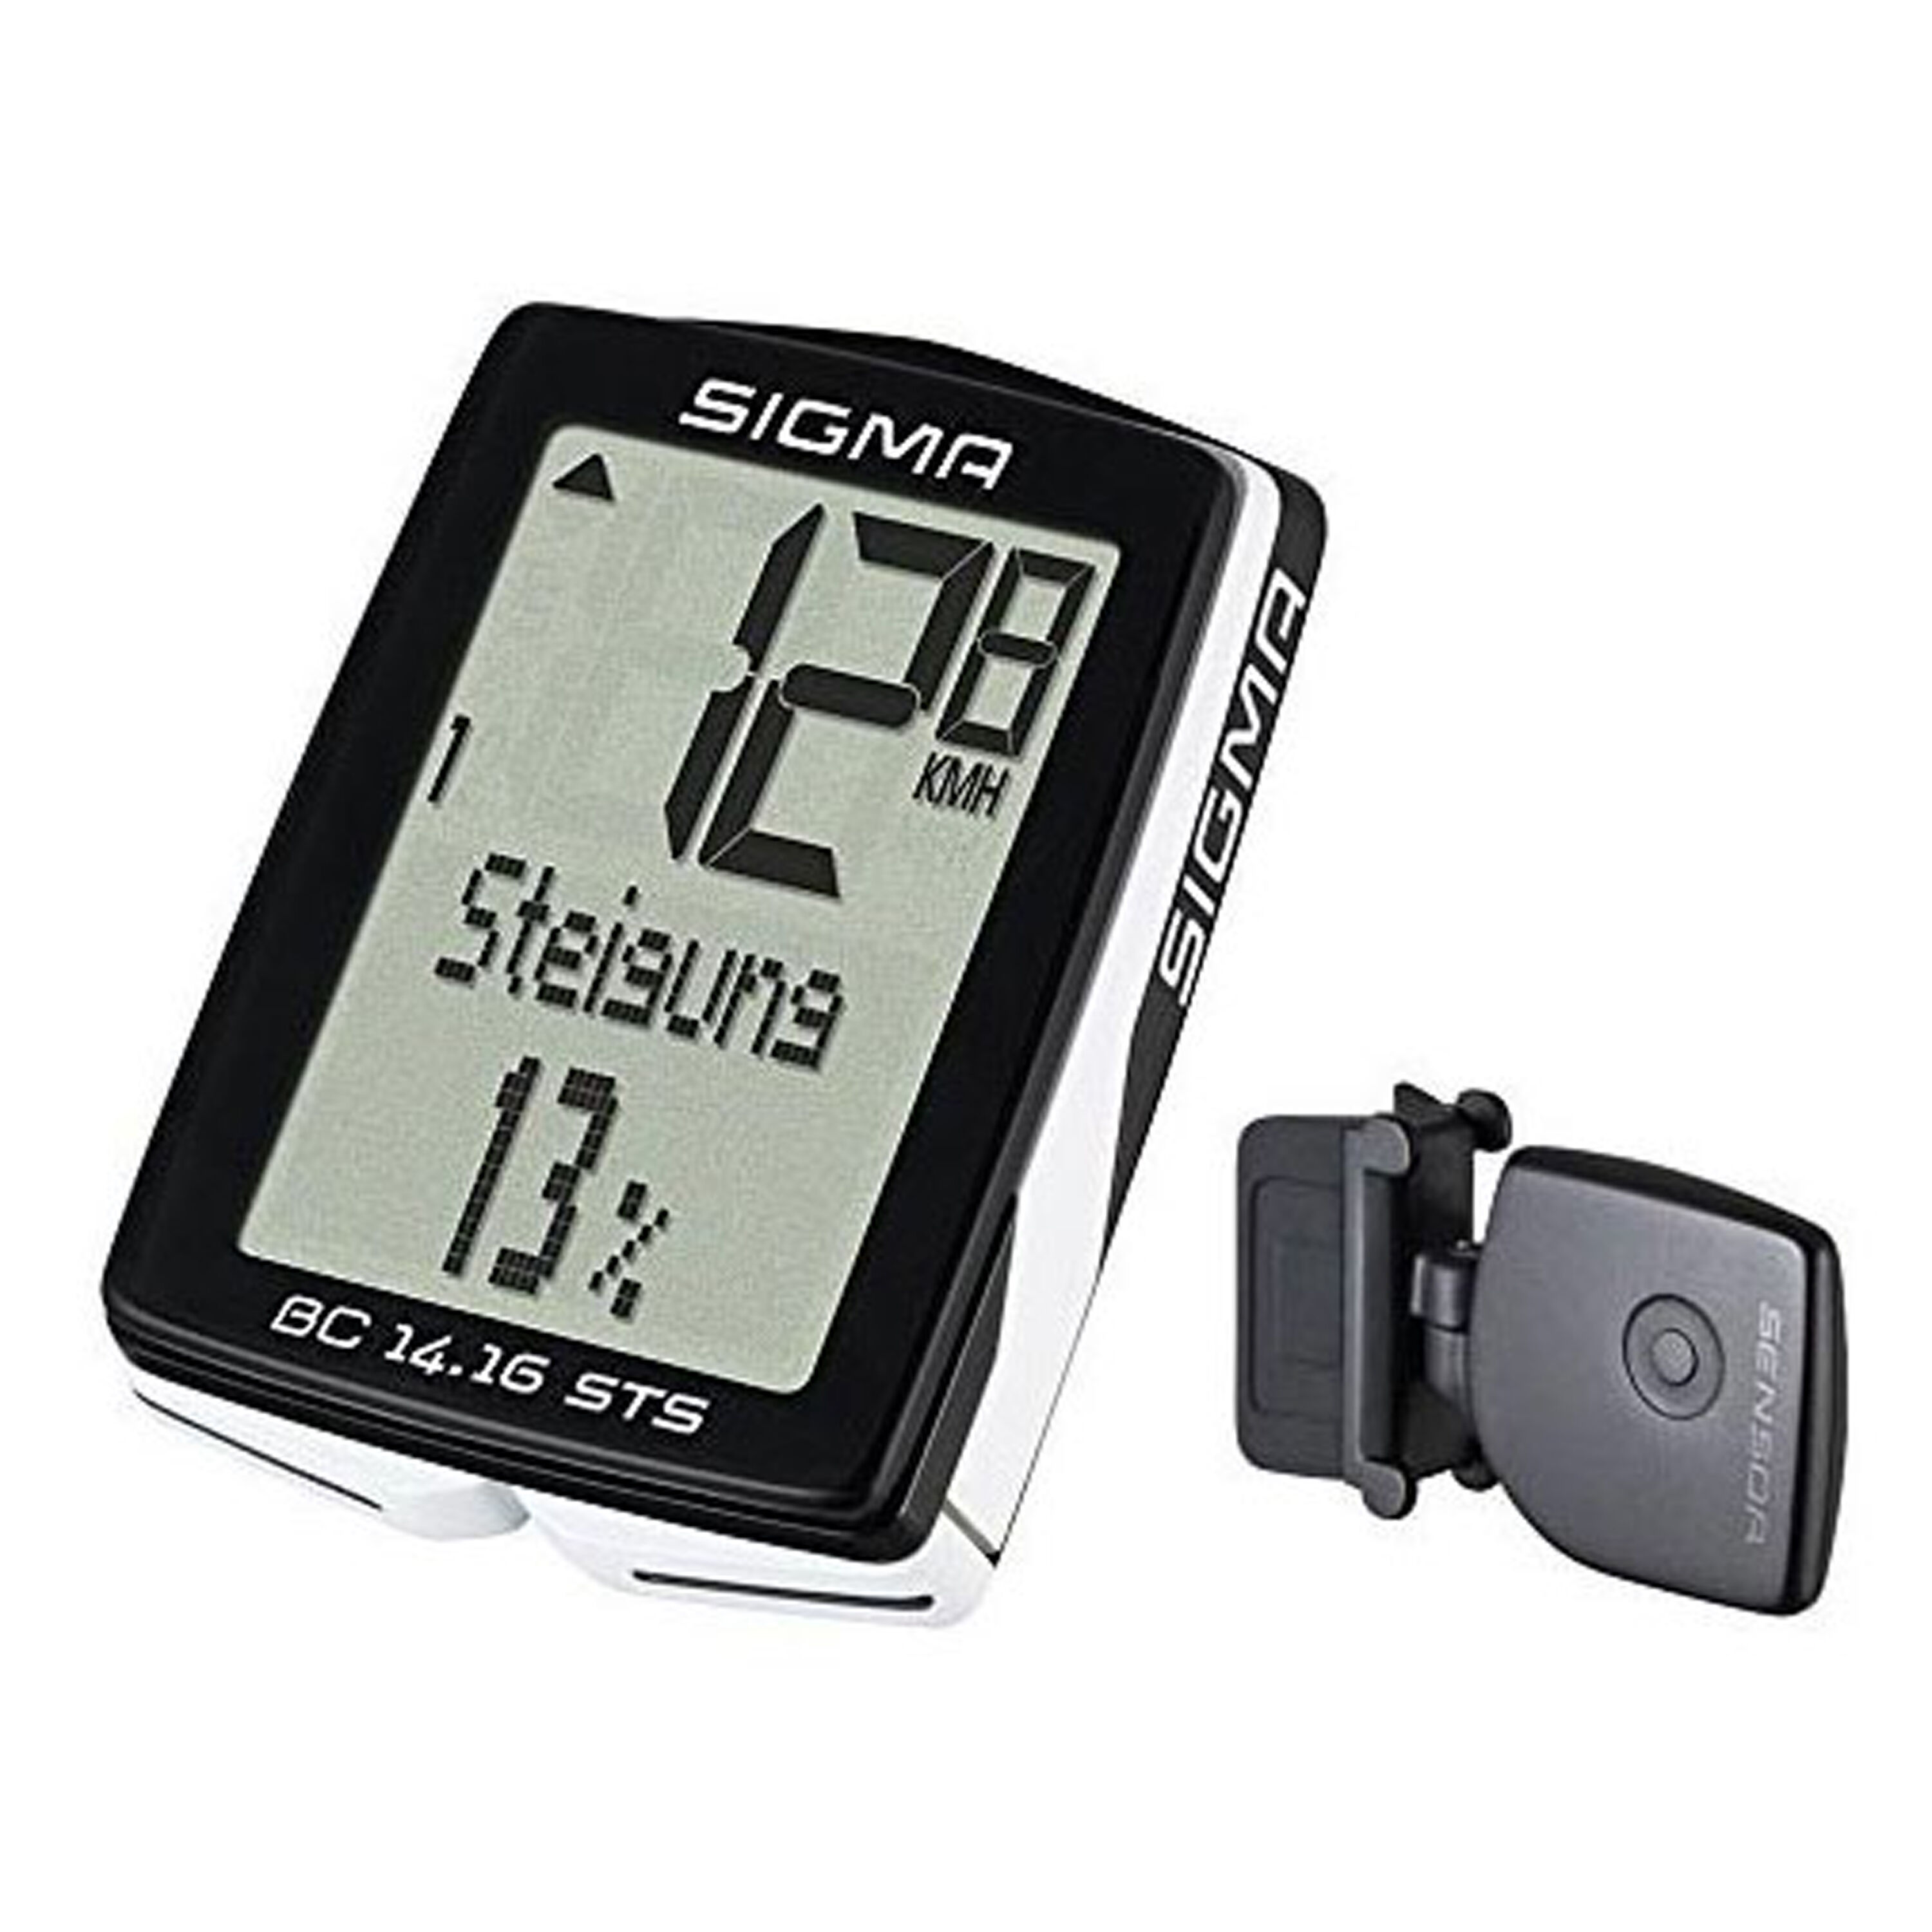 Sigma find. Sigma BC 16.16. Sigma Sport BC 400. Sigma Sport 7000. Sigma Sport STS Speed Transmitter 00439.